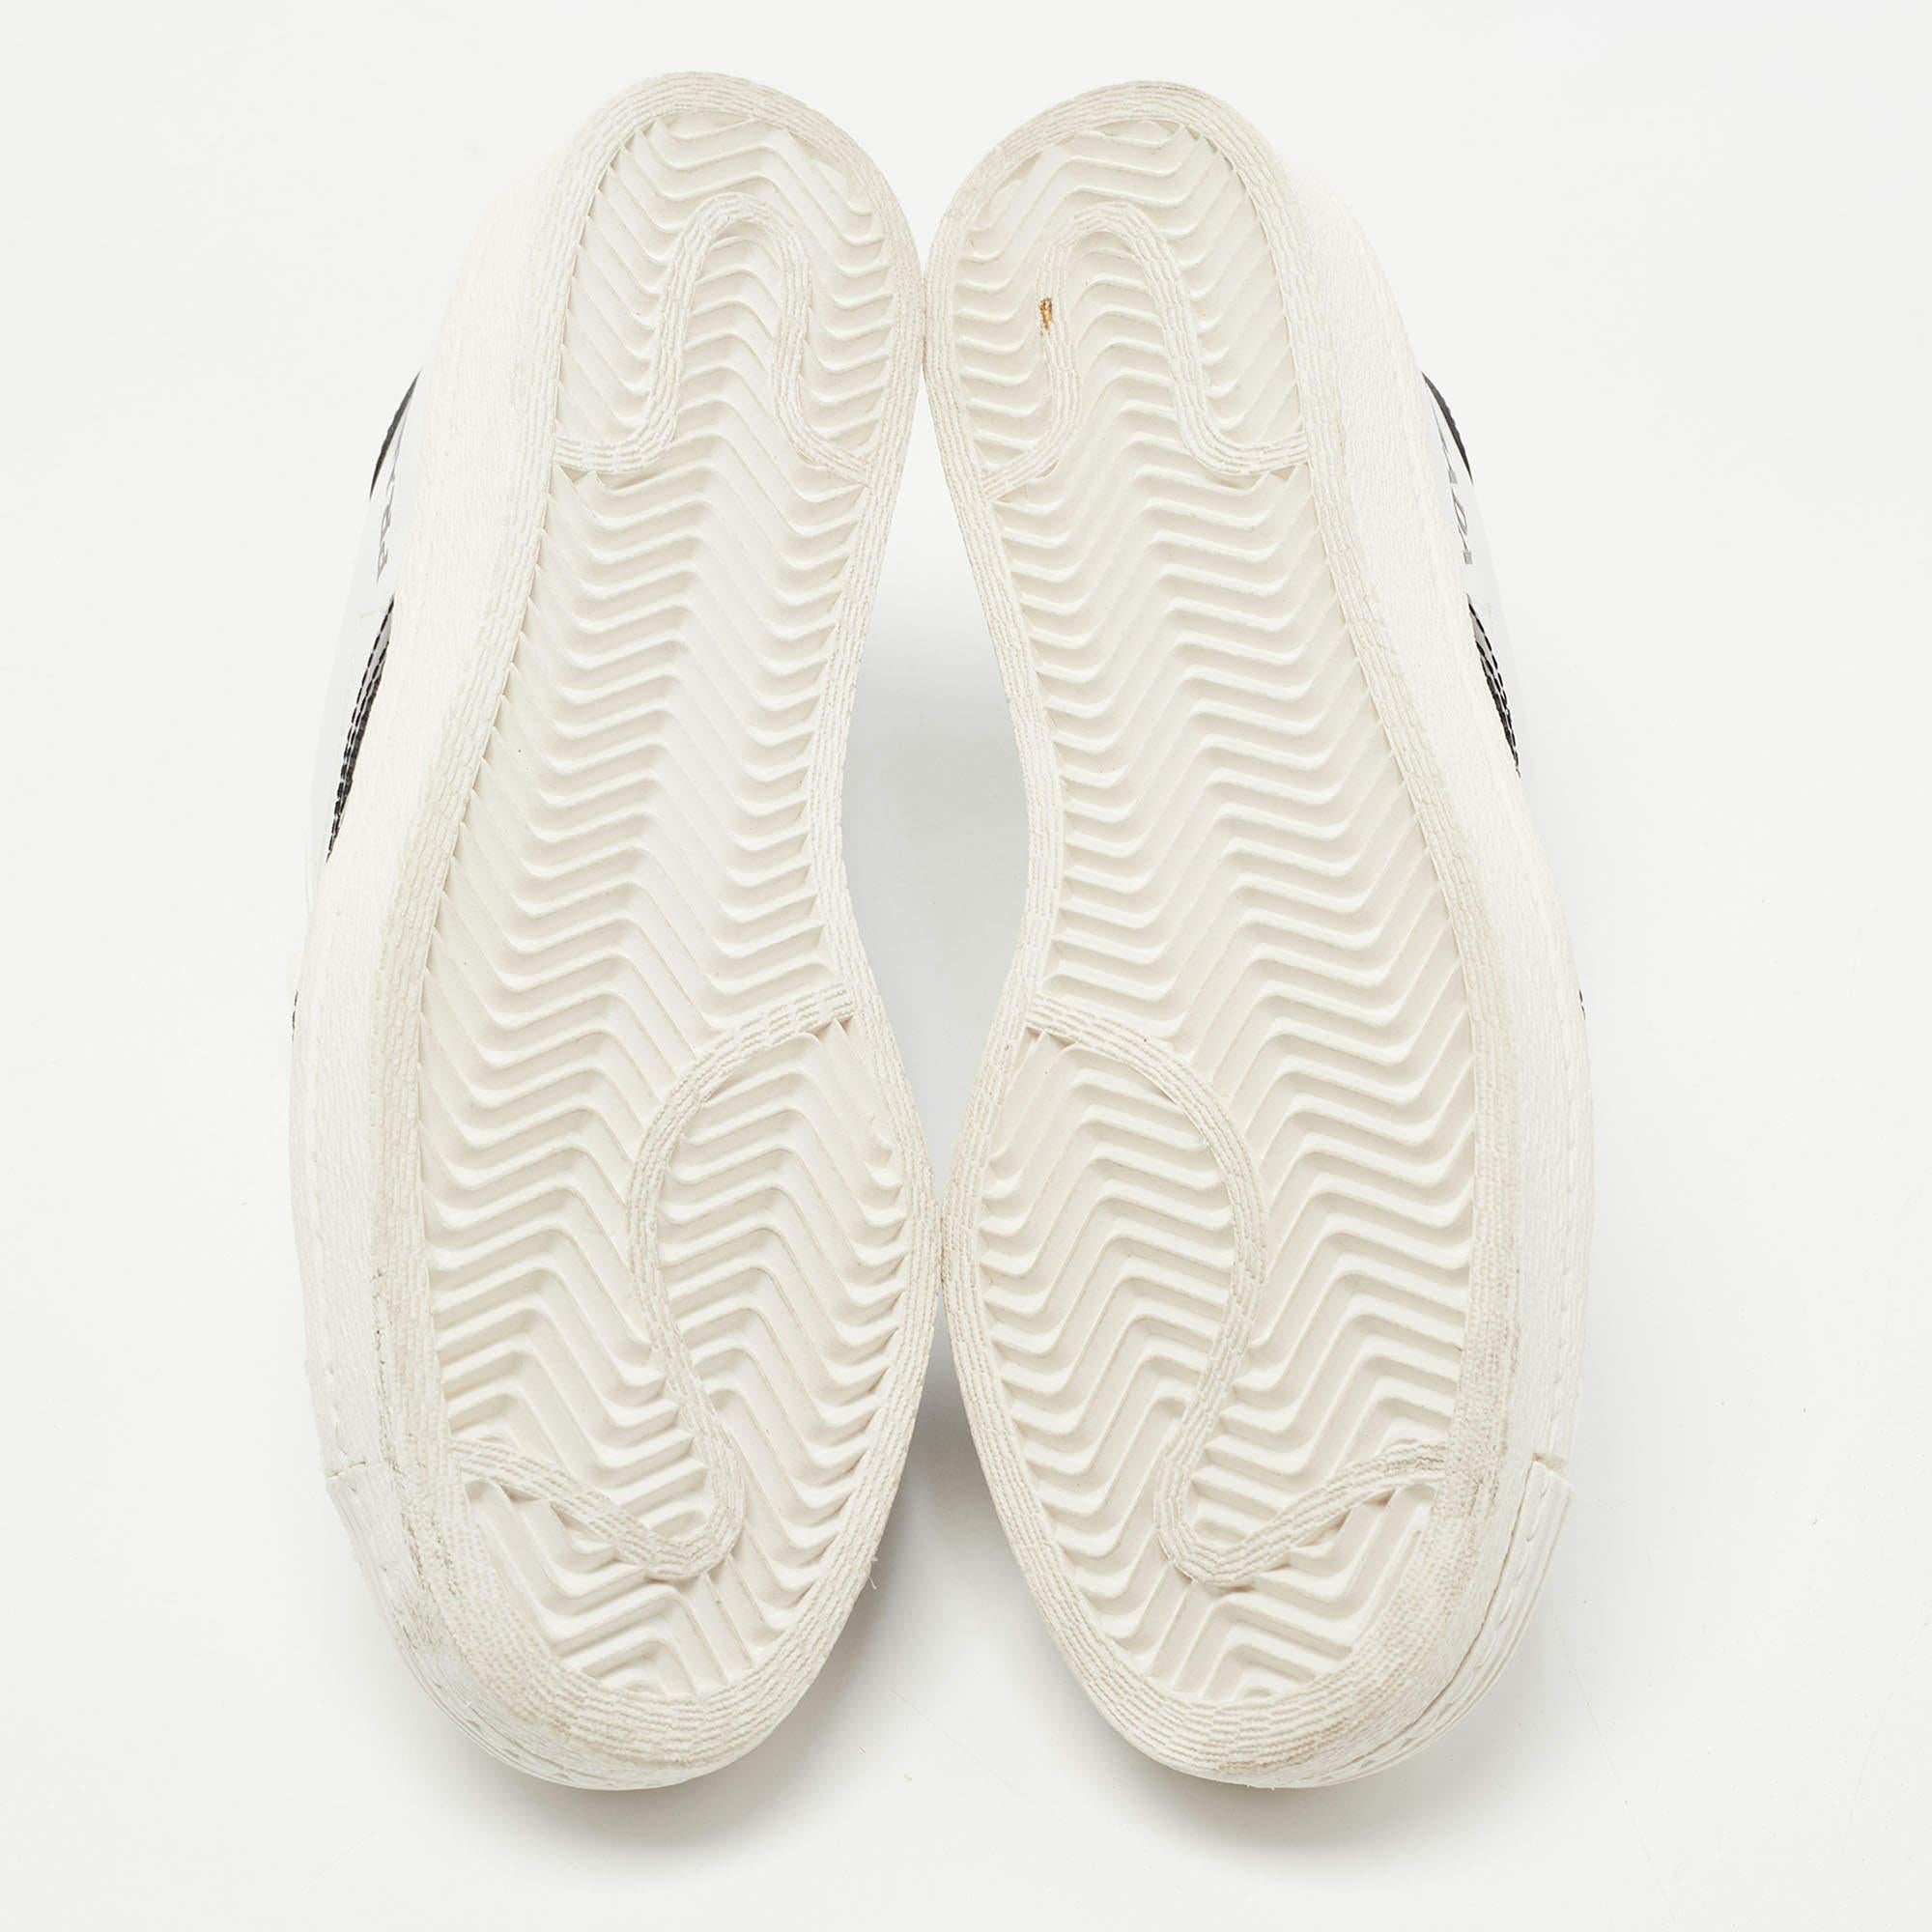 Prada x Adidas White/Black Leather Superstar Sneakers Size 37 1/3 4